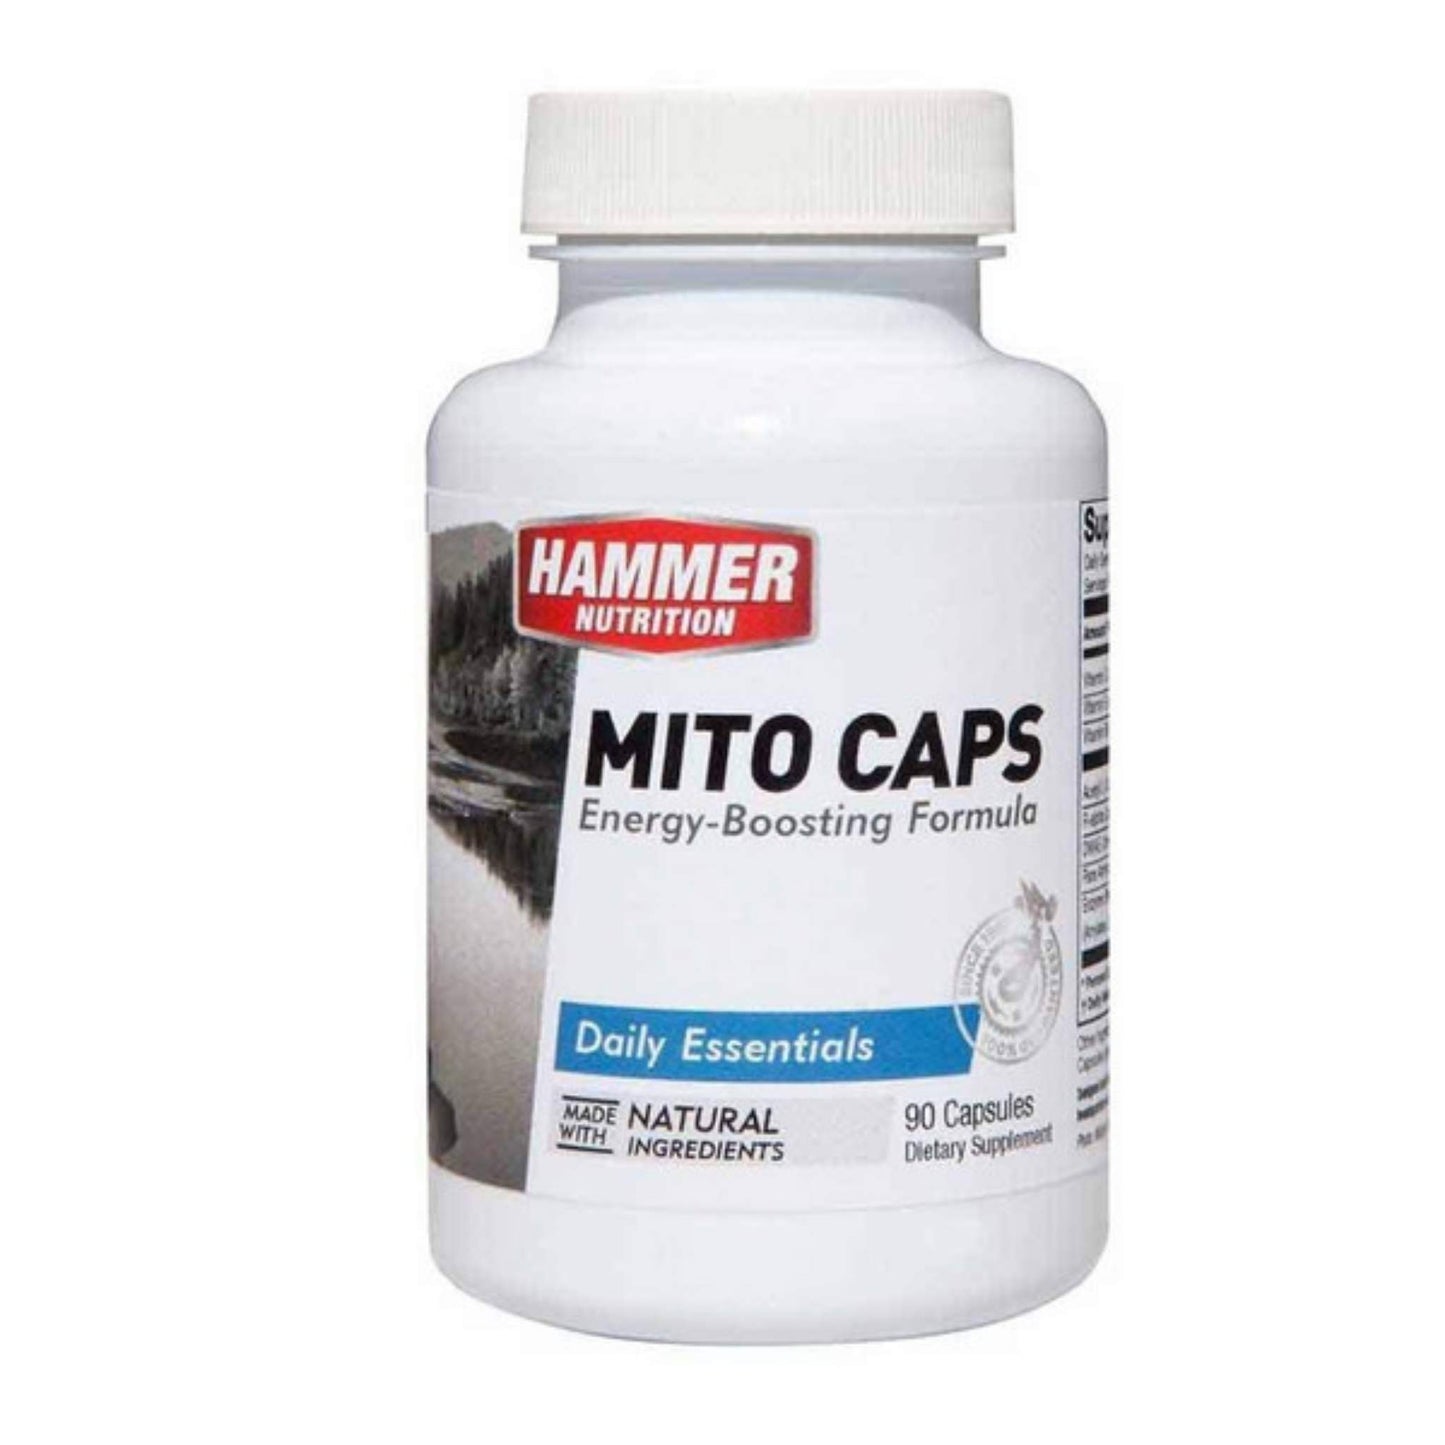 Hammer Nutrition - Mito Caps, 90 Caps, Team Perfect